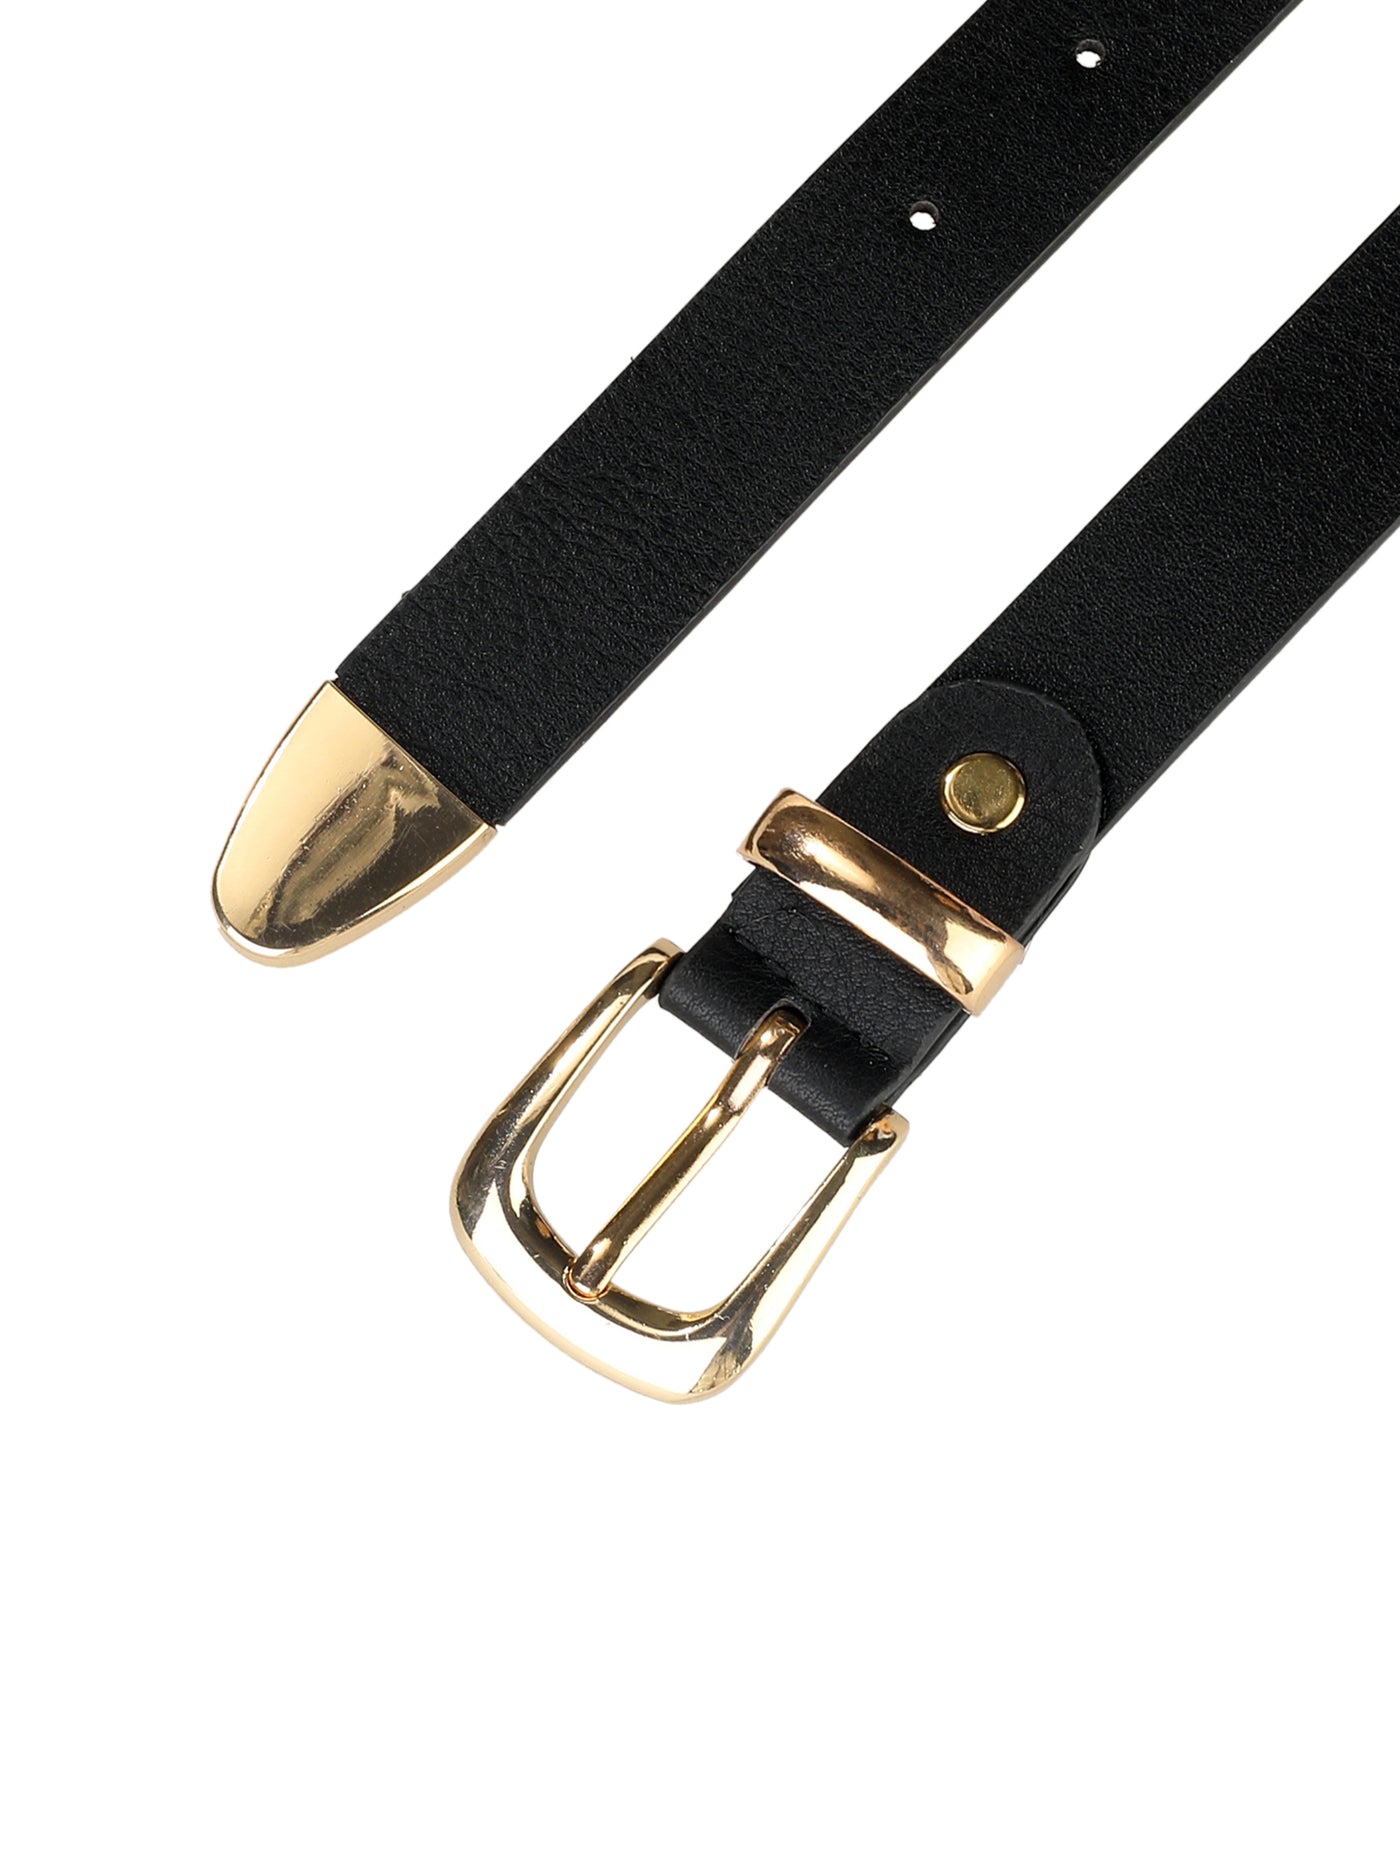 PU Leather Thin Women Belt Metal Buckle Waist Belts For Dresses